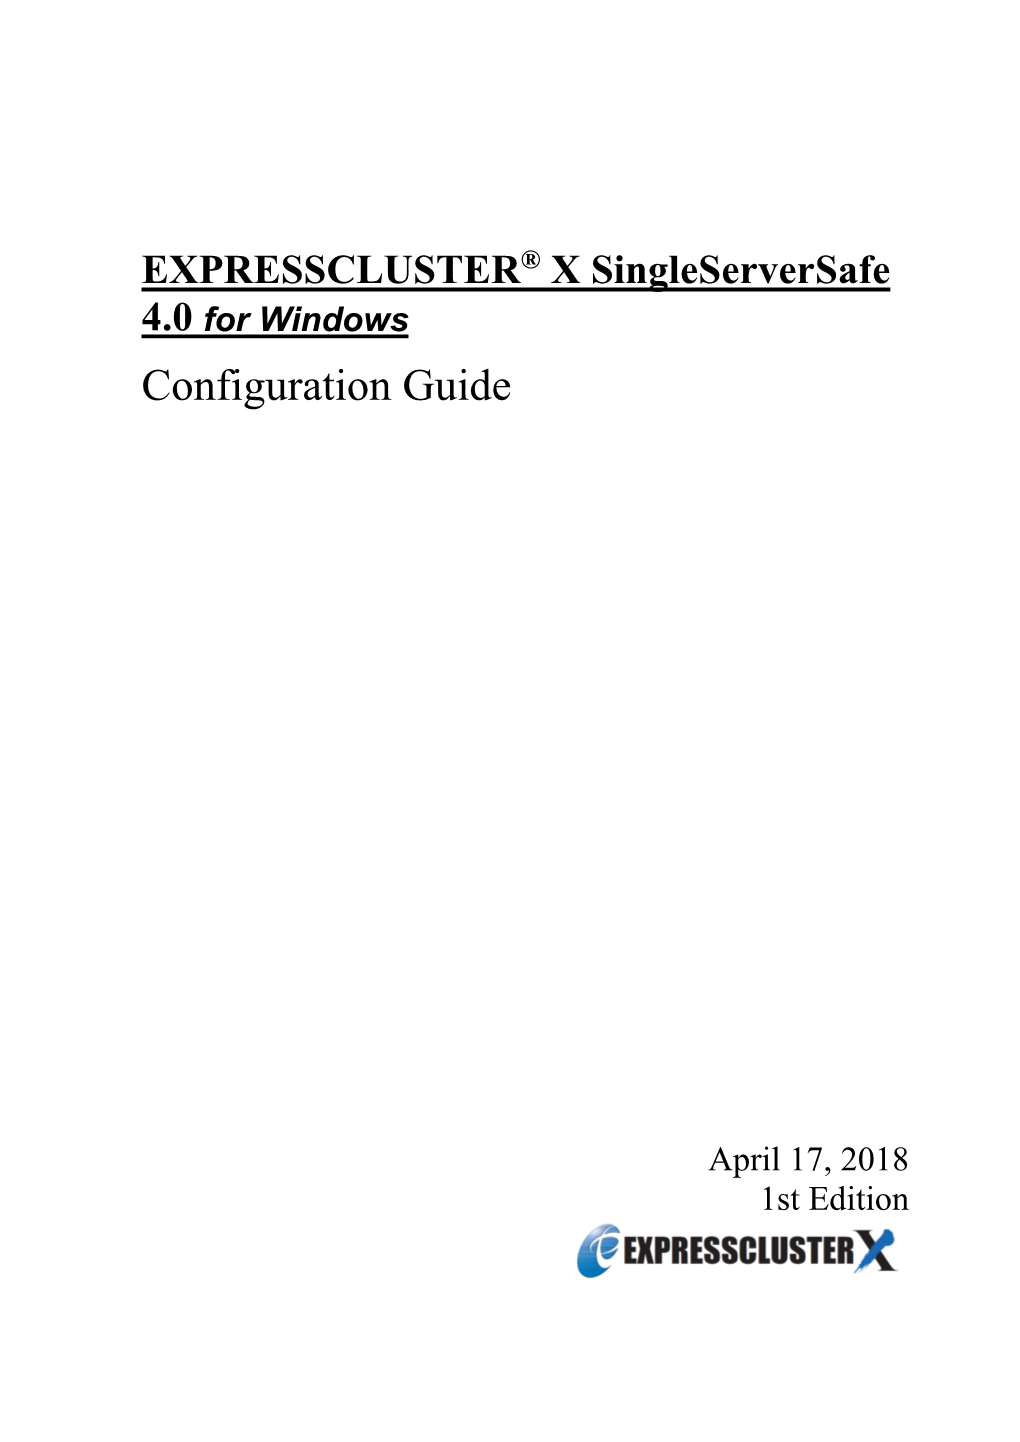 EXPRESSCLUSTER® X Singleserversafe 4.0 for Windows